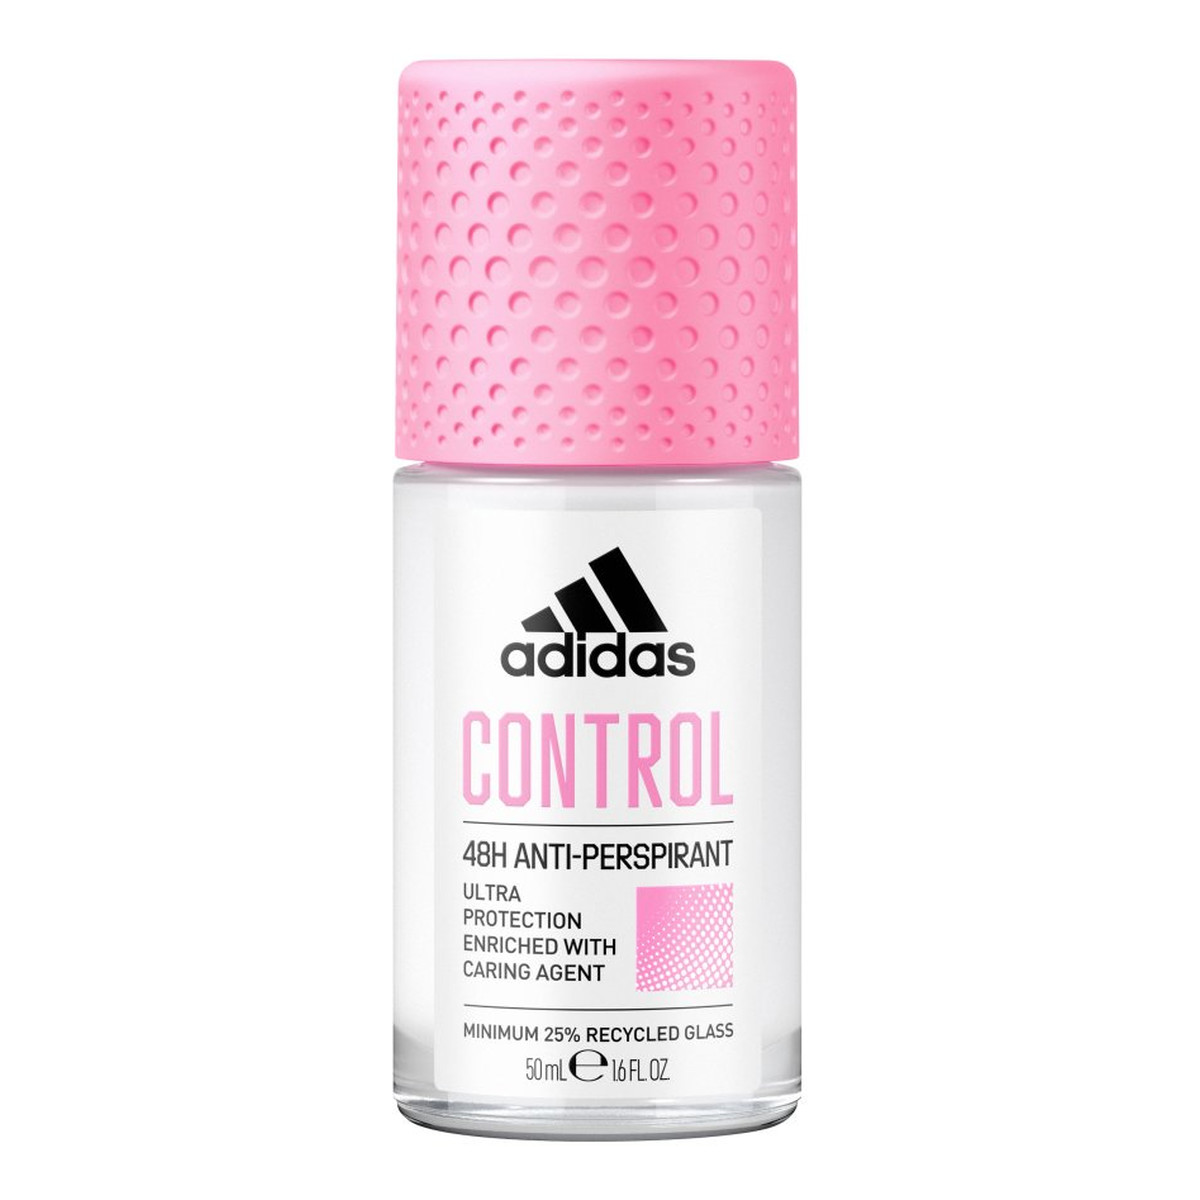 Adidas Control Antyperspirant roll-on 48H 50ml